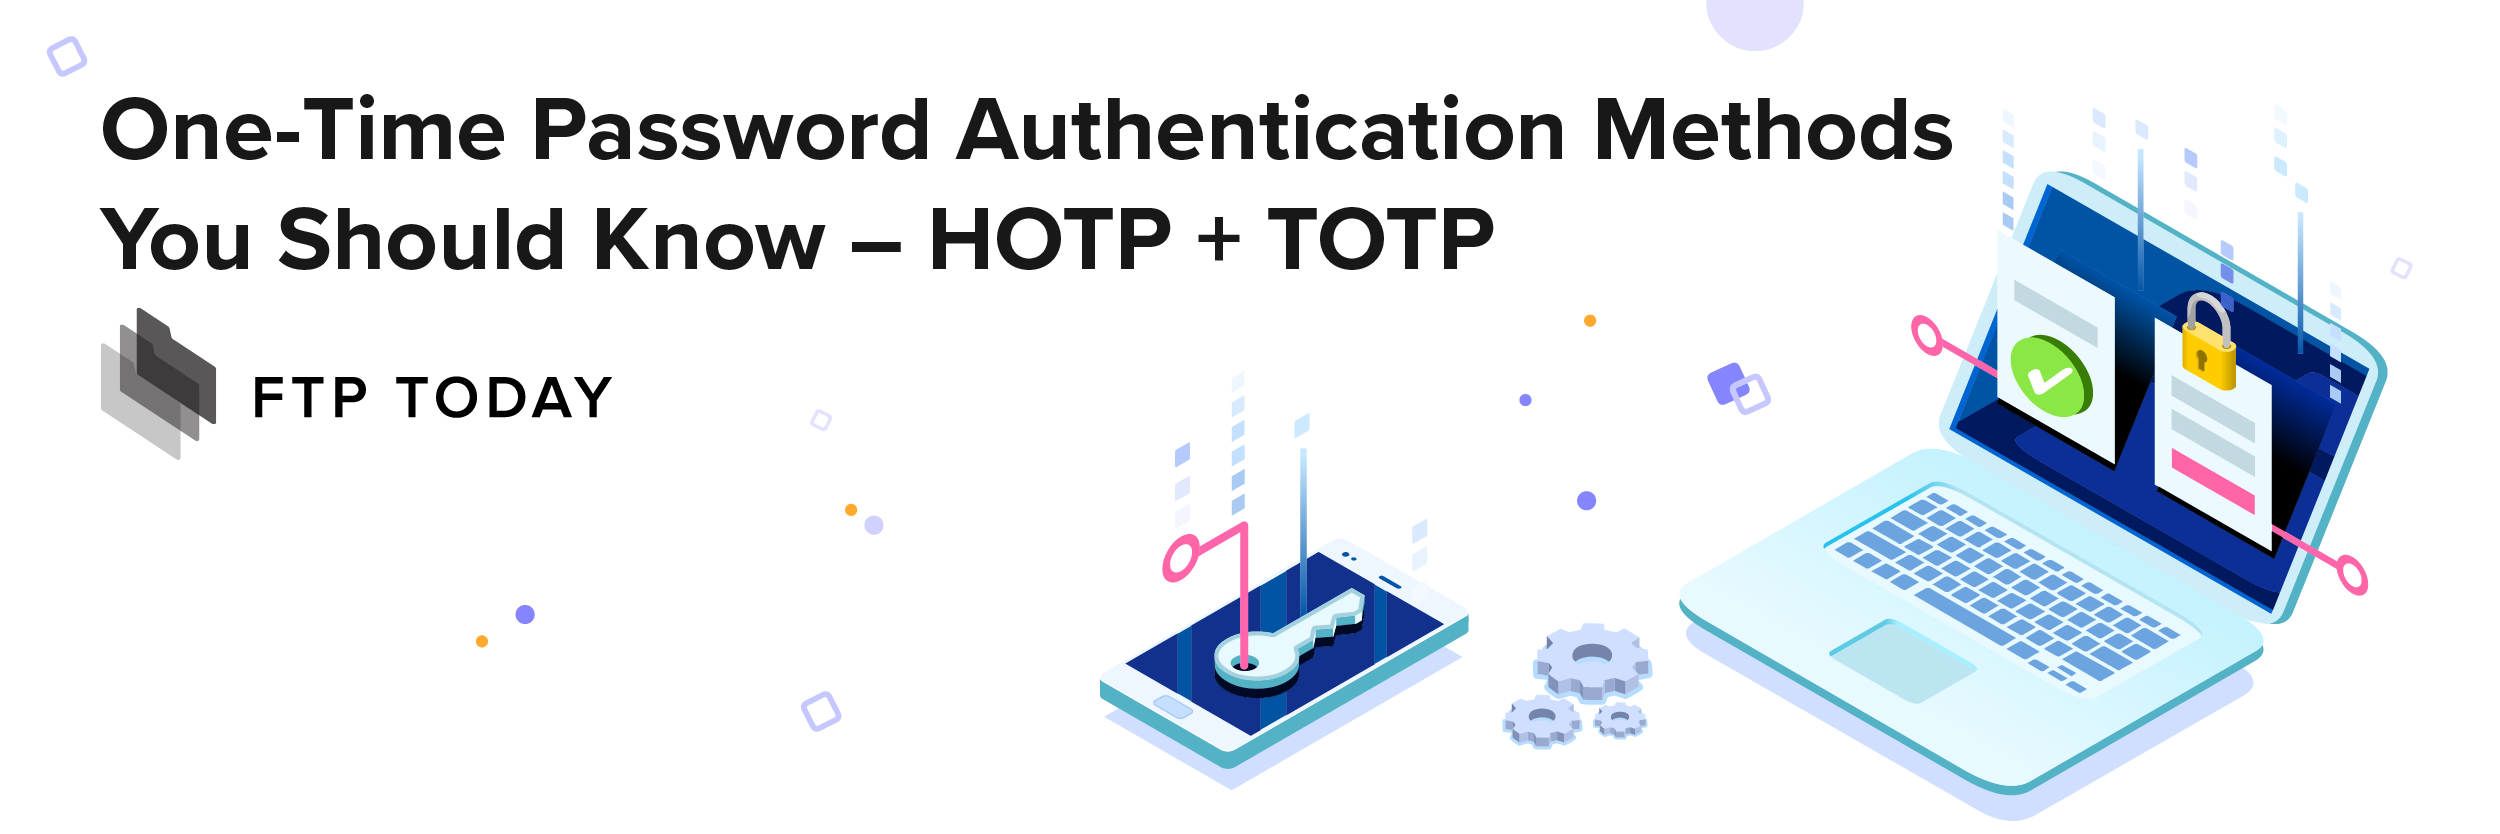 google authenticator totp mode vs hotp mode